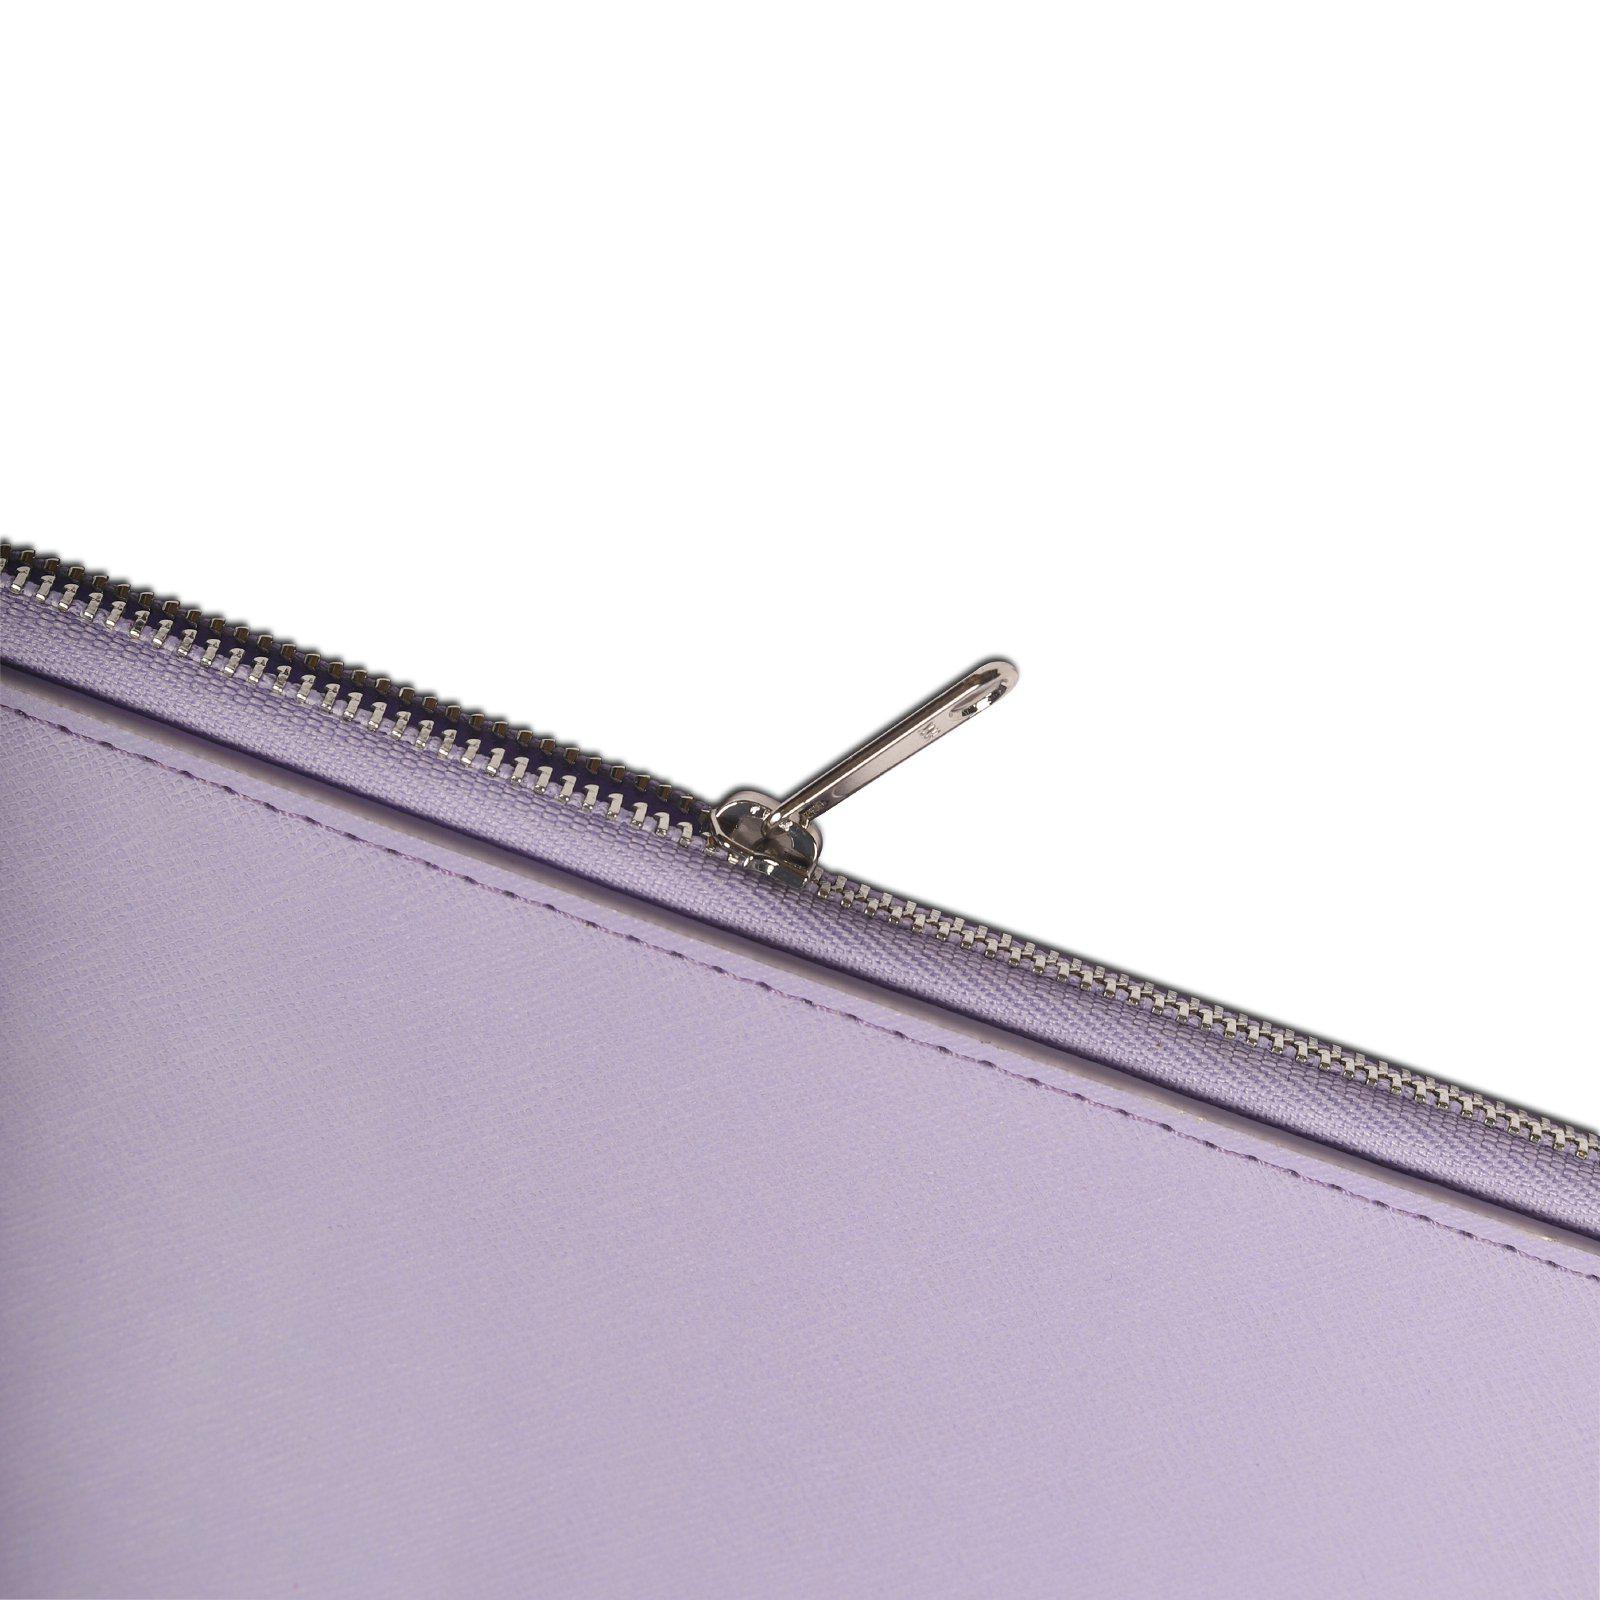 Laptopfodral 16″ Lavender